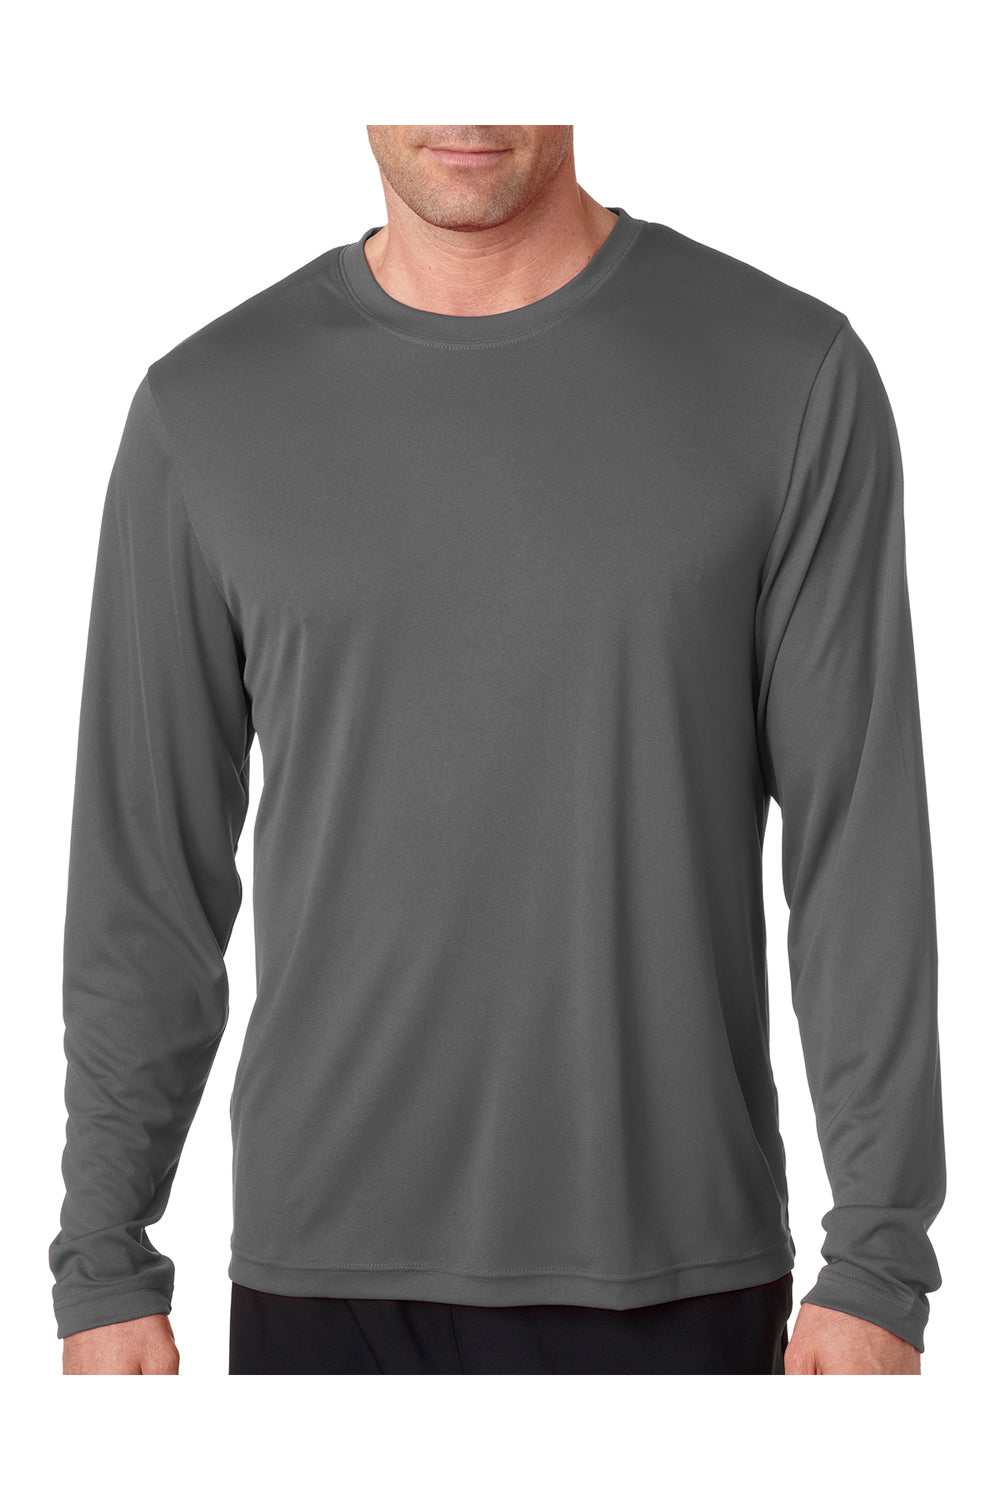 Hanes 482L Mens Cool DRI FreshIQ Moisture Wicking Long Sleeve Crewneck T-Shirt Graphite Grey Front